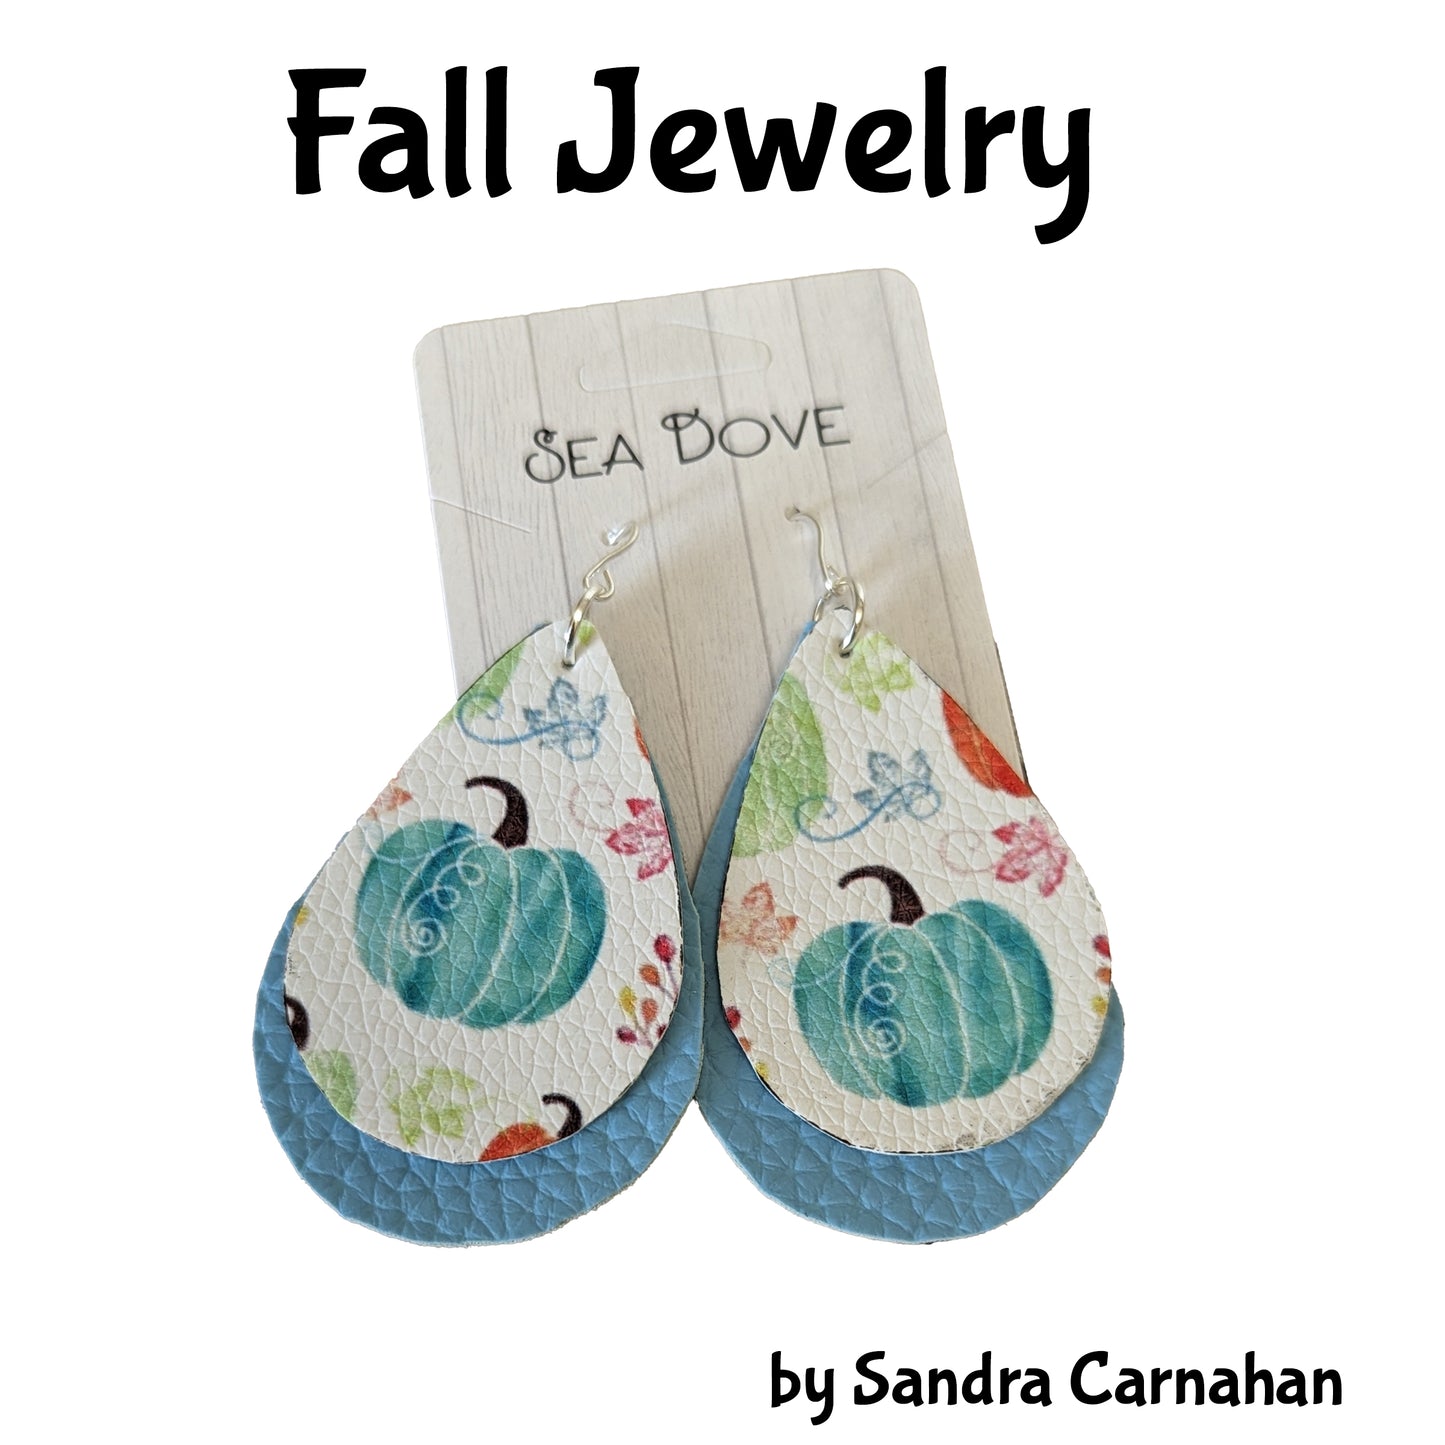 Fall Jewelry